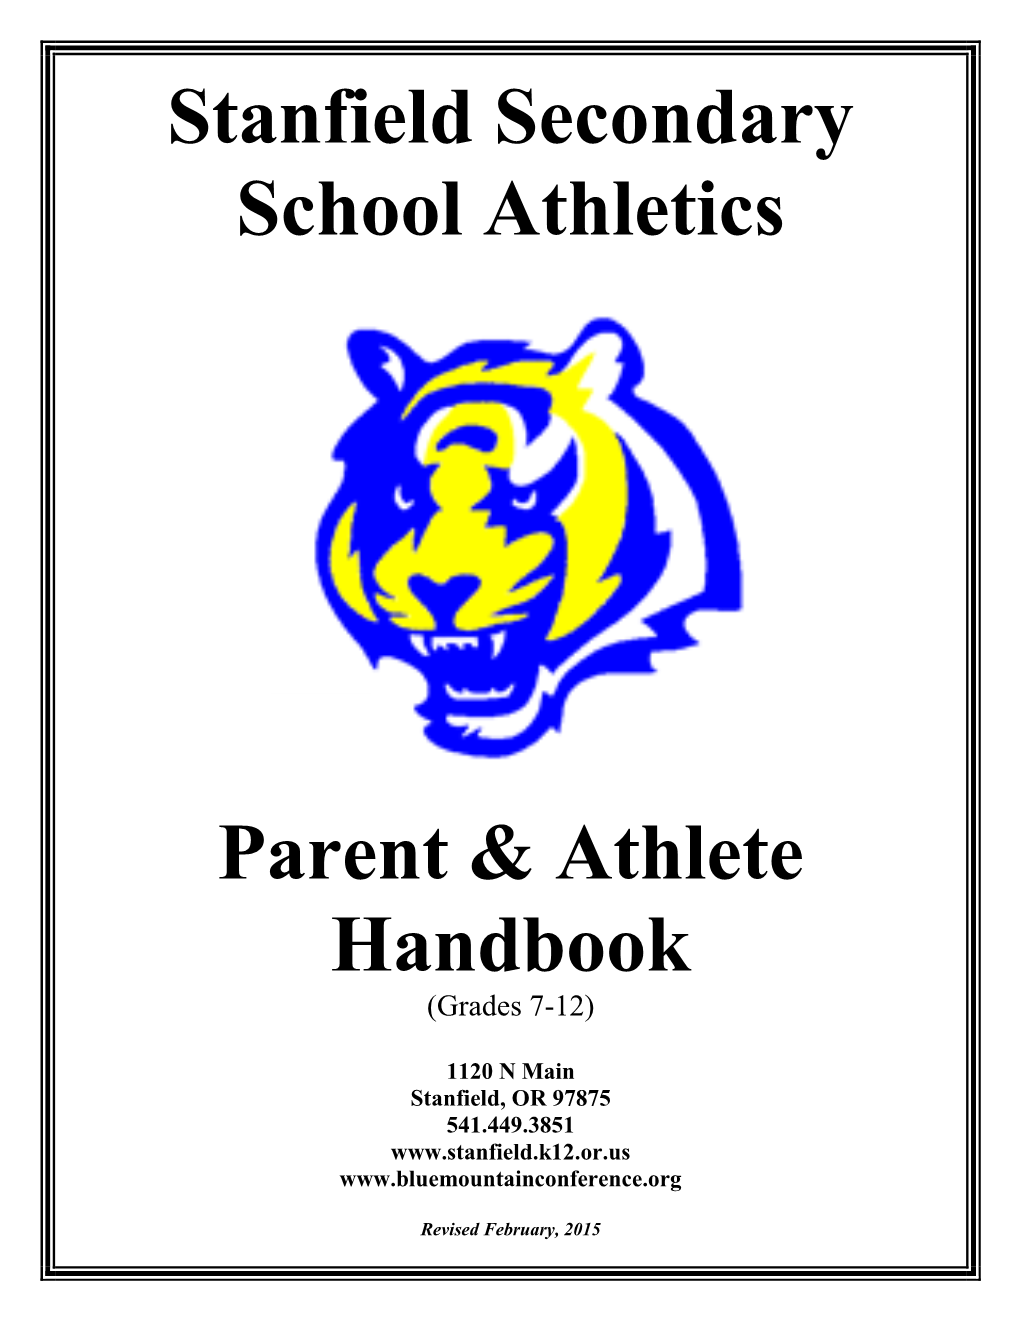 Stanfield Secondary School Athletics Parent & Athlete Handbook